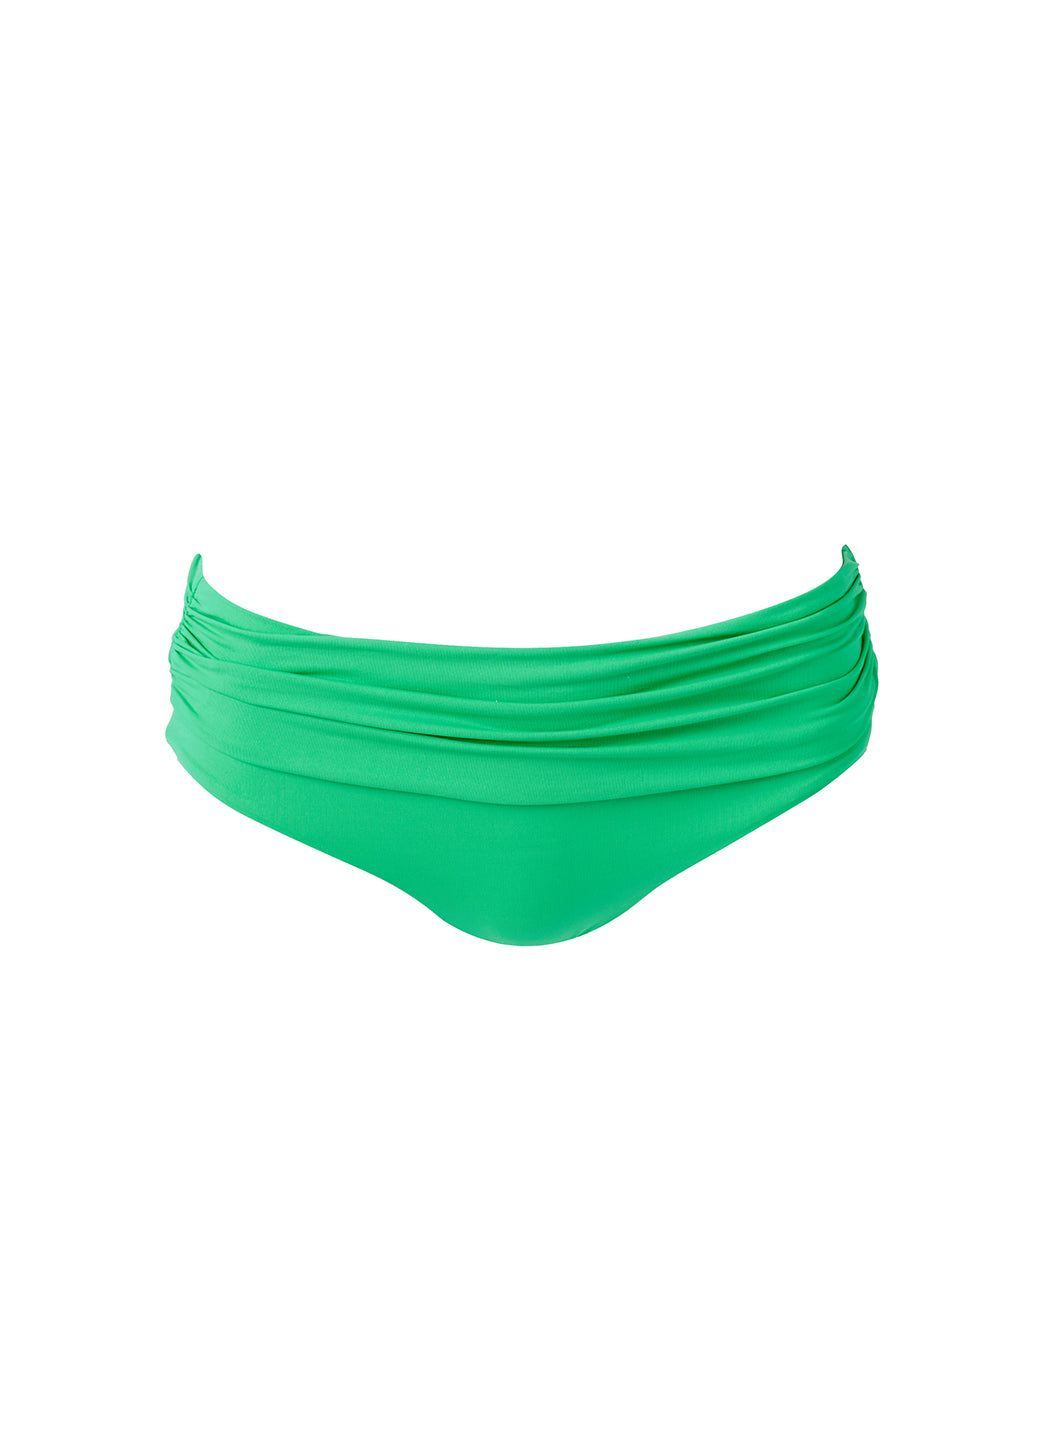 bel air green bikini bottom cutouts 2024